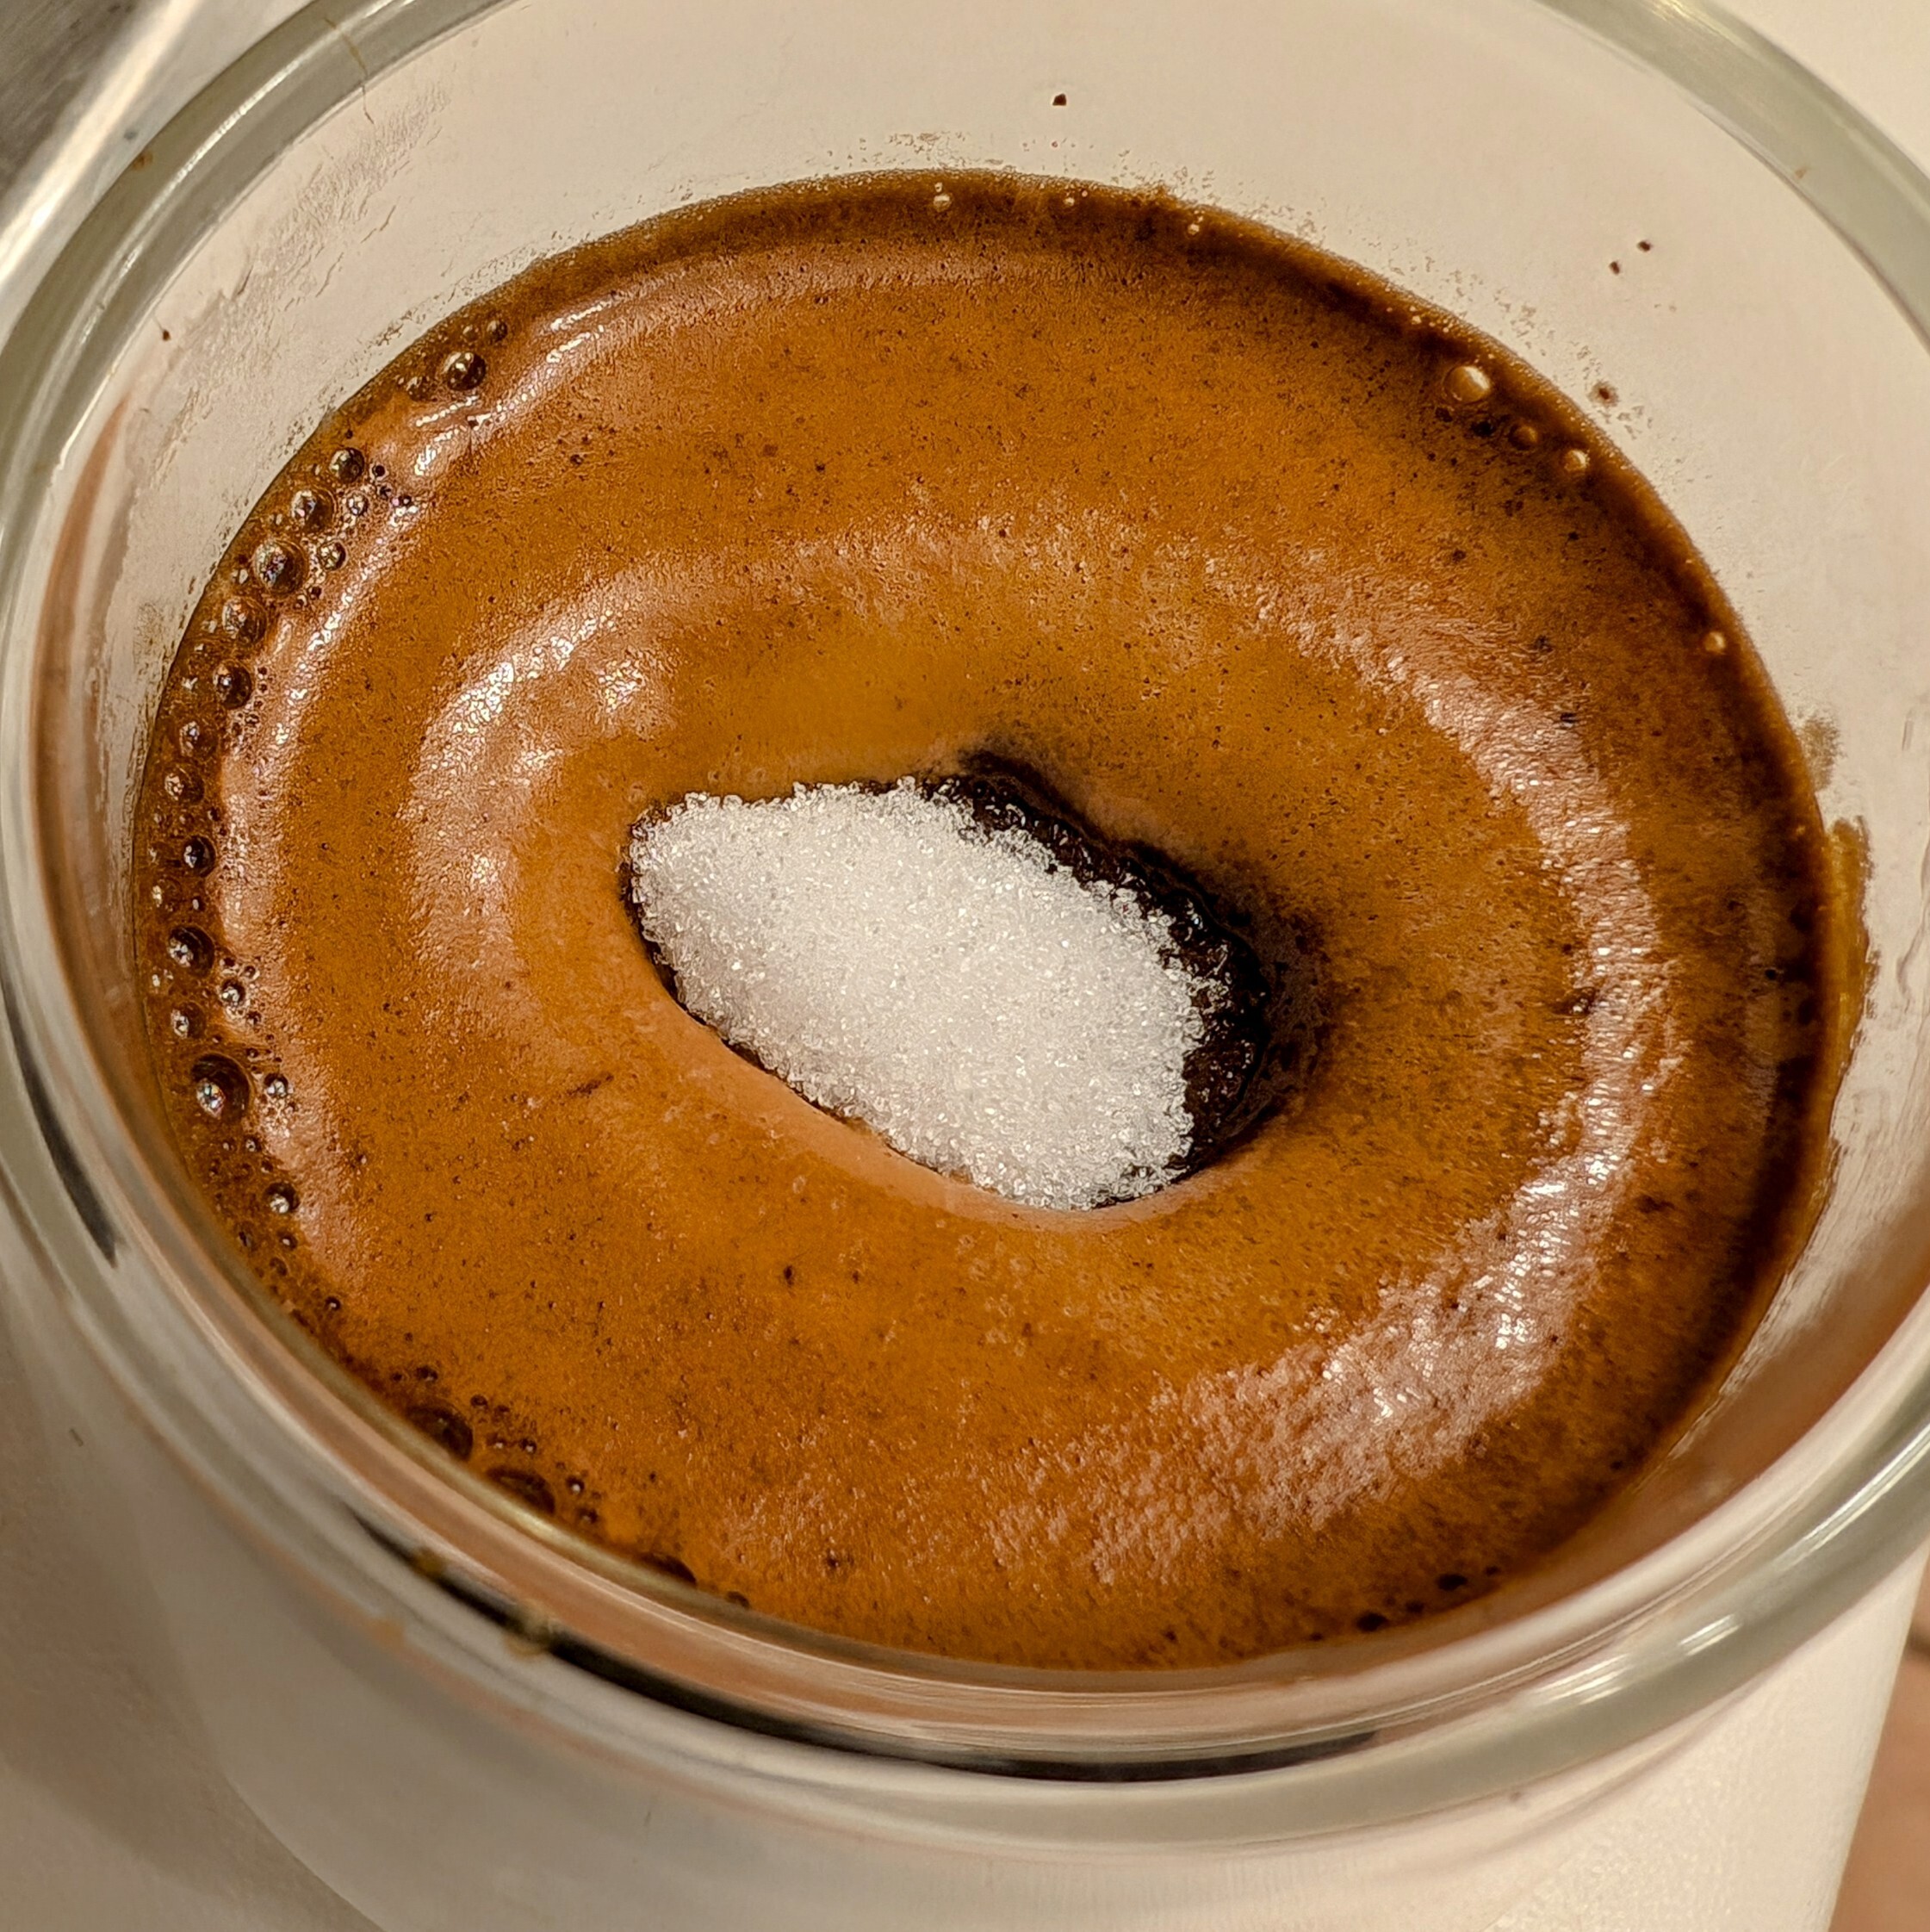 sugar island sitting on a layer of crema from an espresso shot